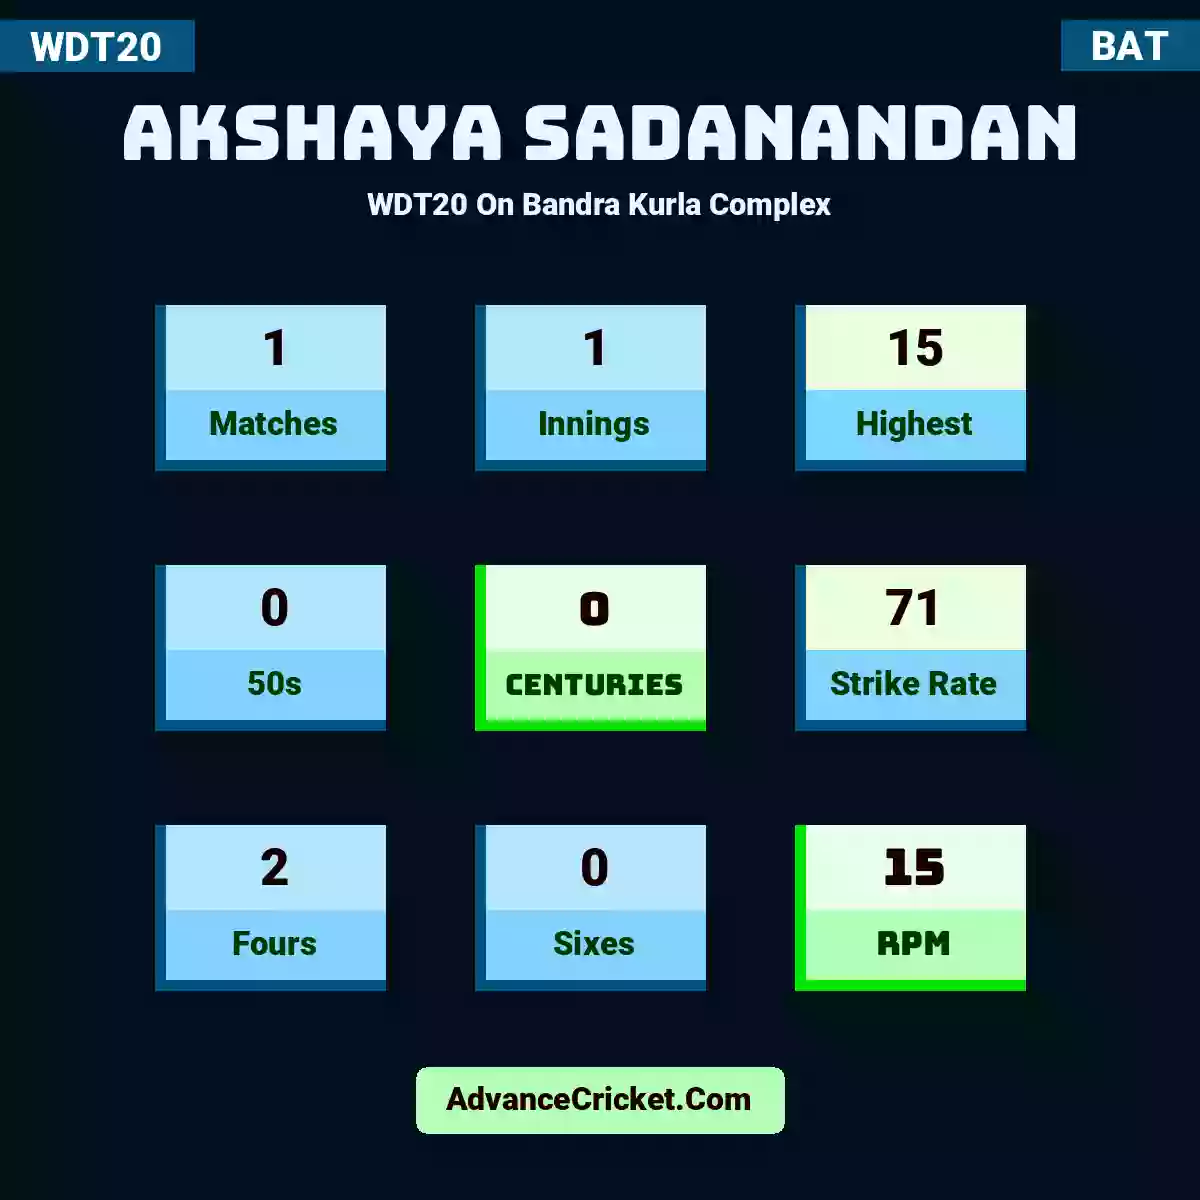 Akshaya Sadanandan WDT20  On Bandra Kurla Complex, Akshaya Sadanandan played 1 matches, scored 15 runs as highest, 0 half-centuries, and 0 centuries, with a strike rate of 71. A.Sadanandan hit 2 fours and 0 sixes, with an RPM of 15.